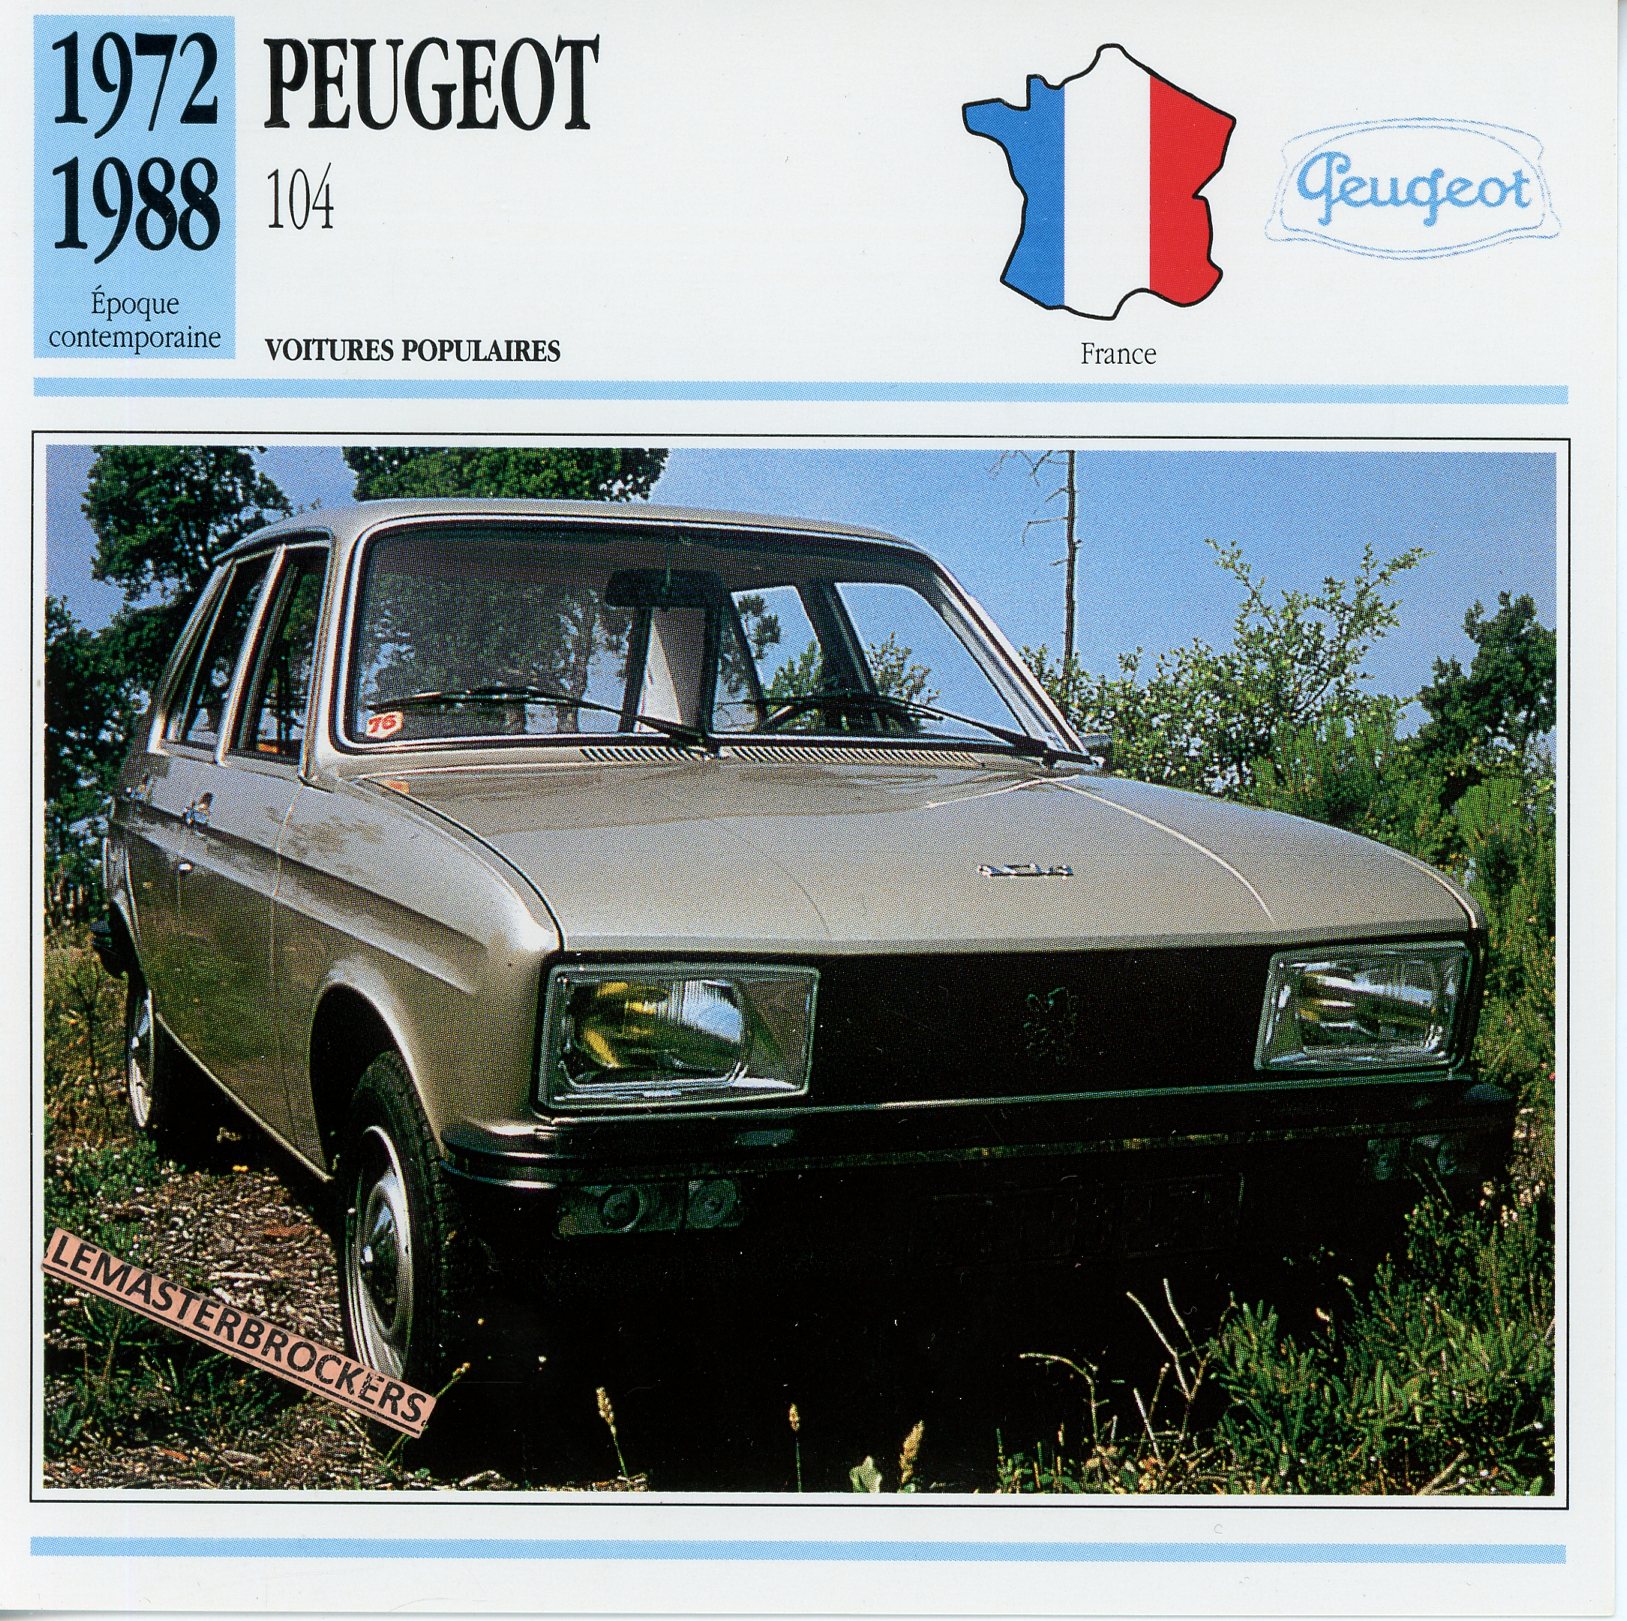 PEUGEOT-104-1972-1988-FICHE-AUTO-ATLAS-LEMASTERBROCKERS